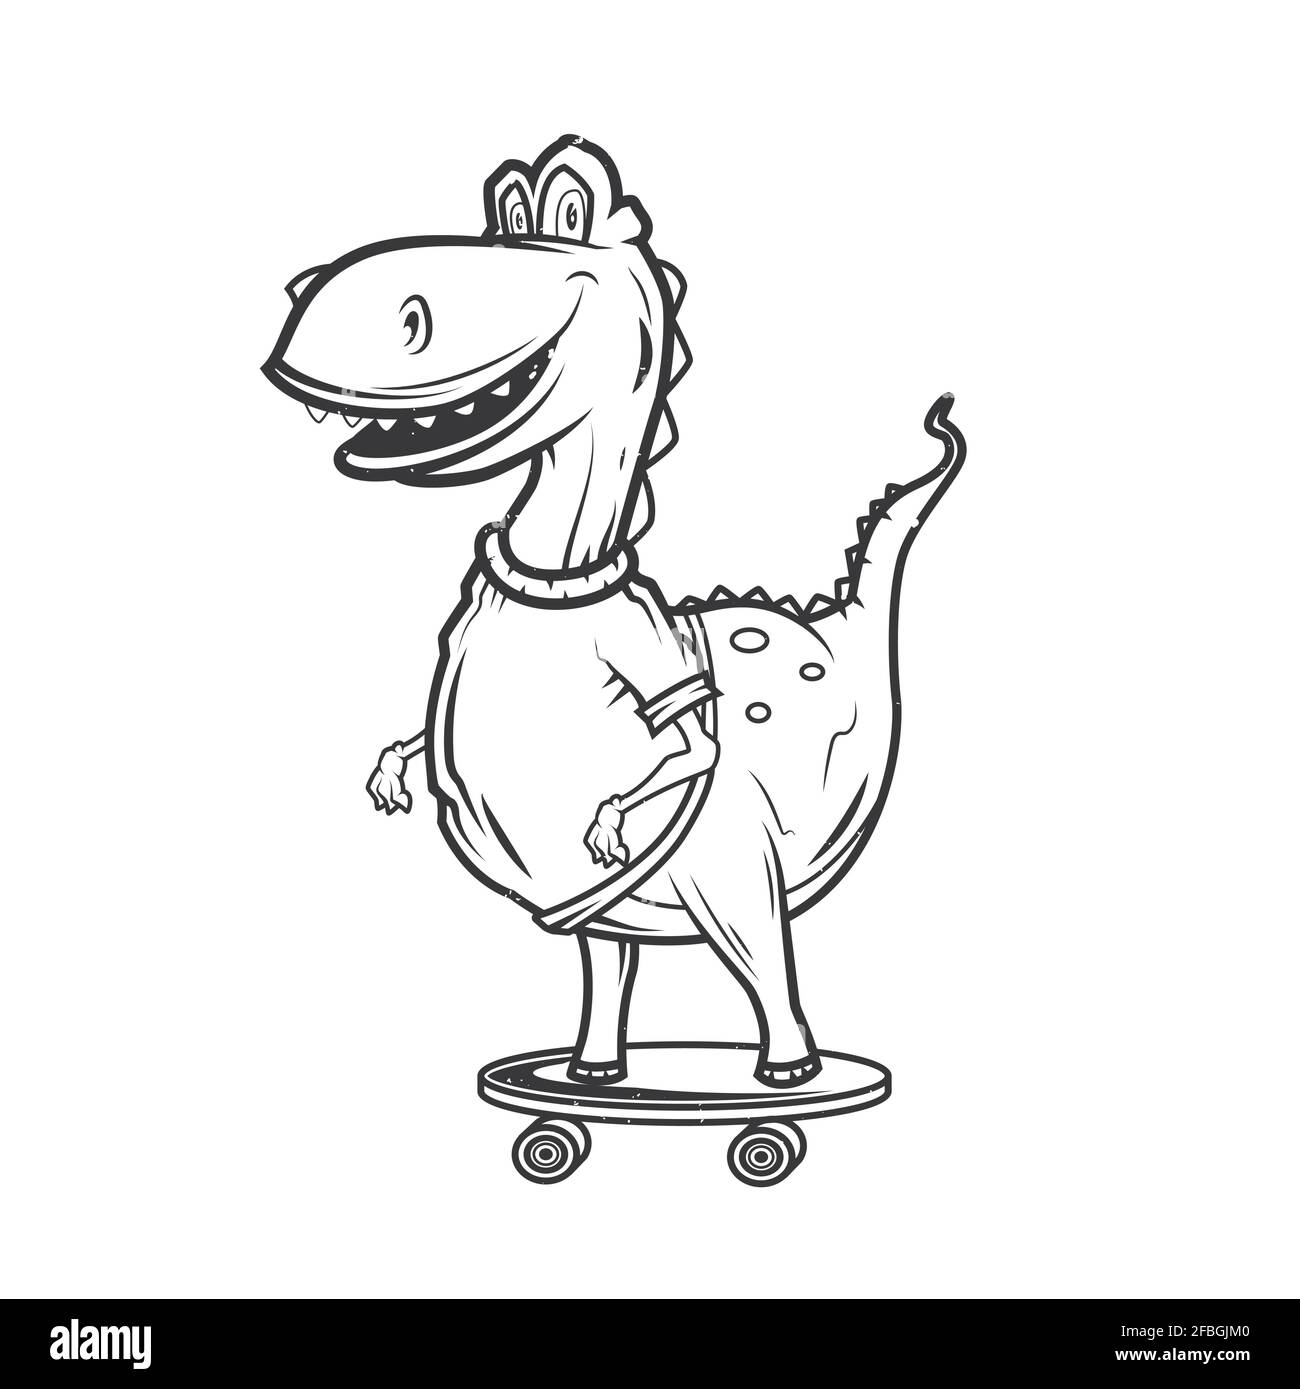 Isolated illustration of dinosaur on the skateboard Stock Vector